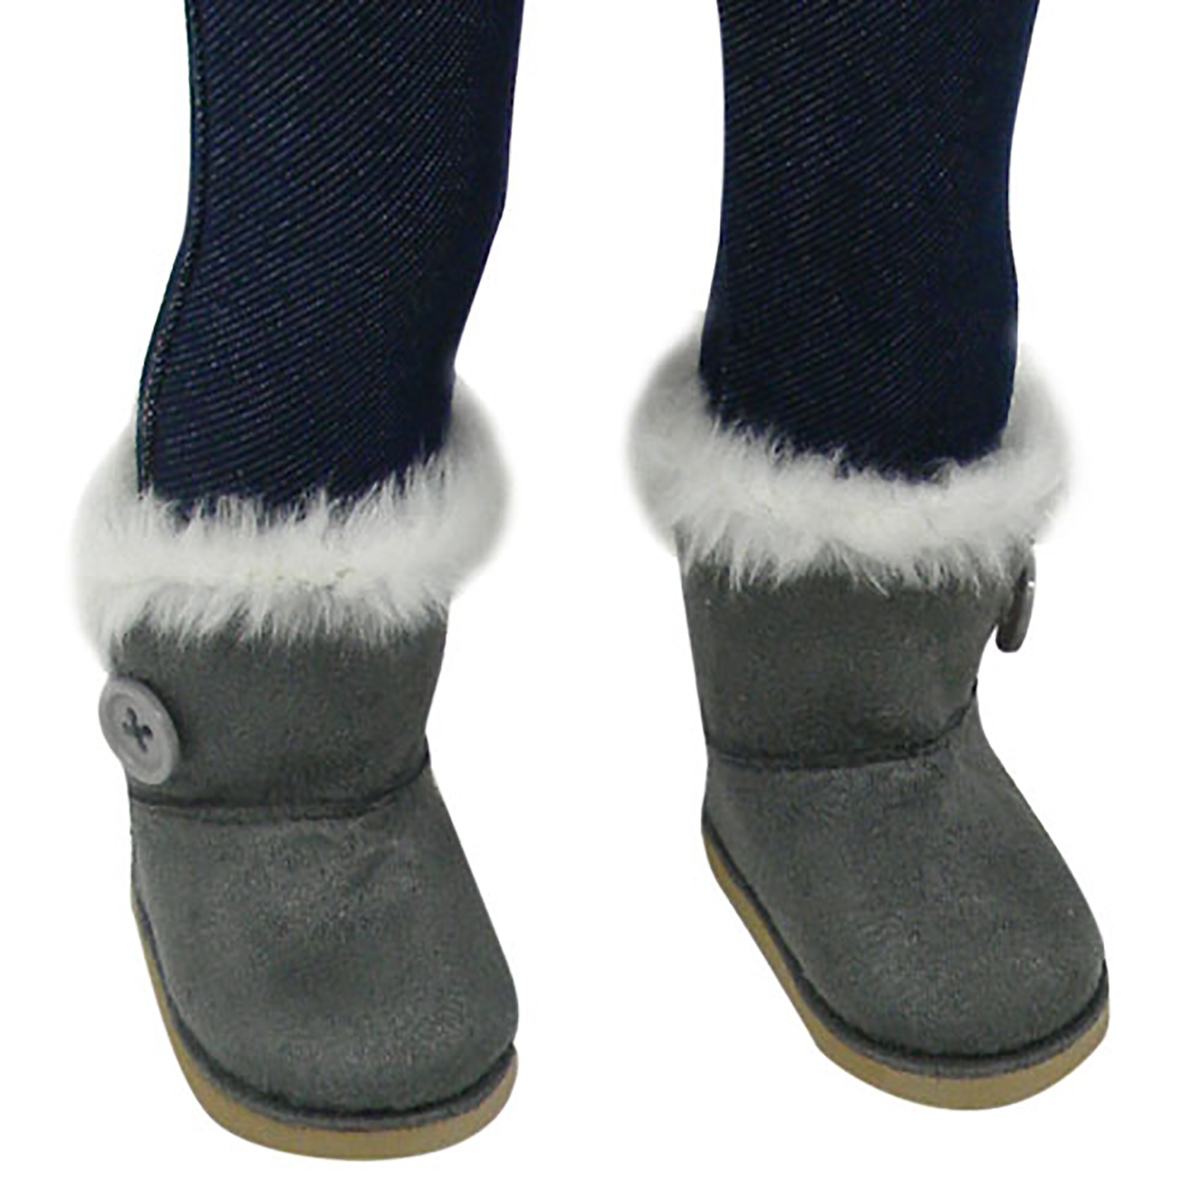 Sophia's(R) Suede Winter Boots